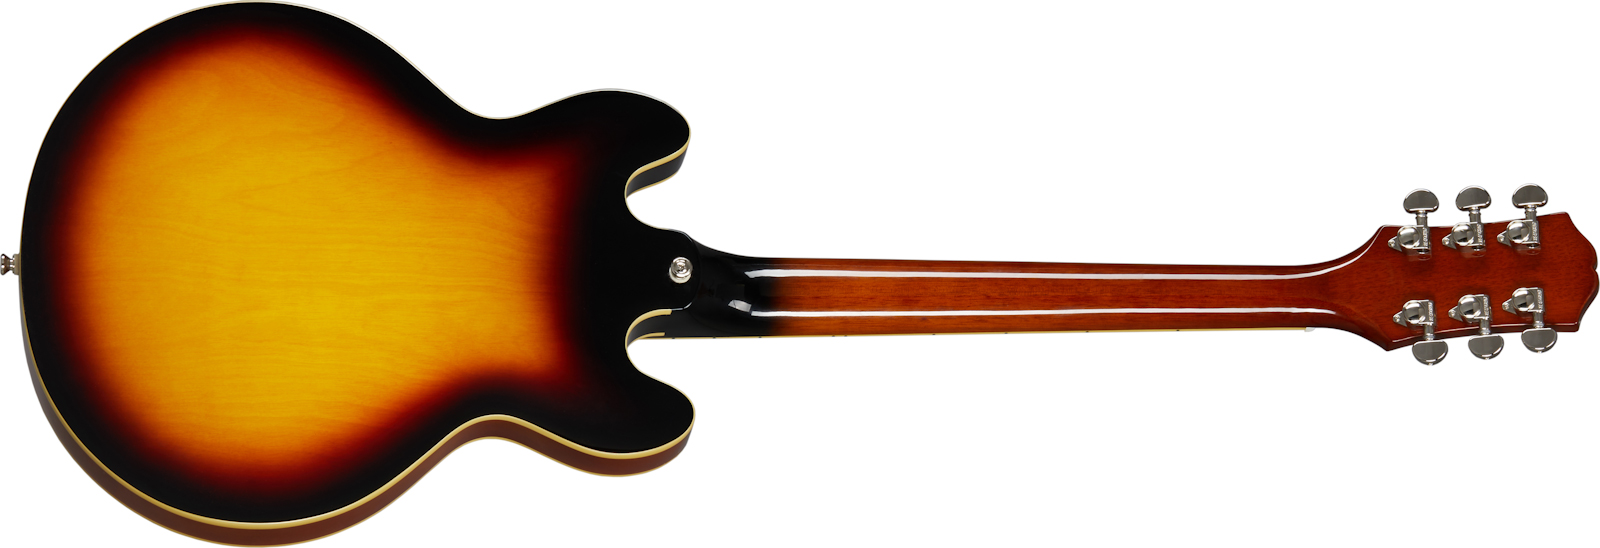 Epiphone Es-339 Inspired By Gibson 2020 2h Ht Rw - Vintage Sunburst - Semi-Hollow E-Gitarre - Variation 1